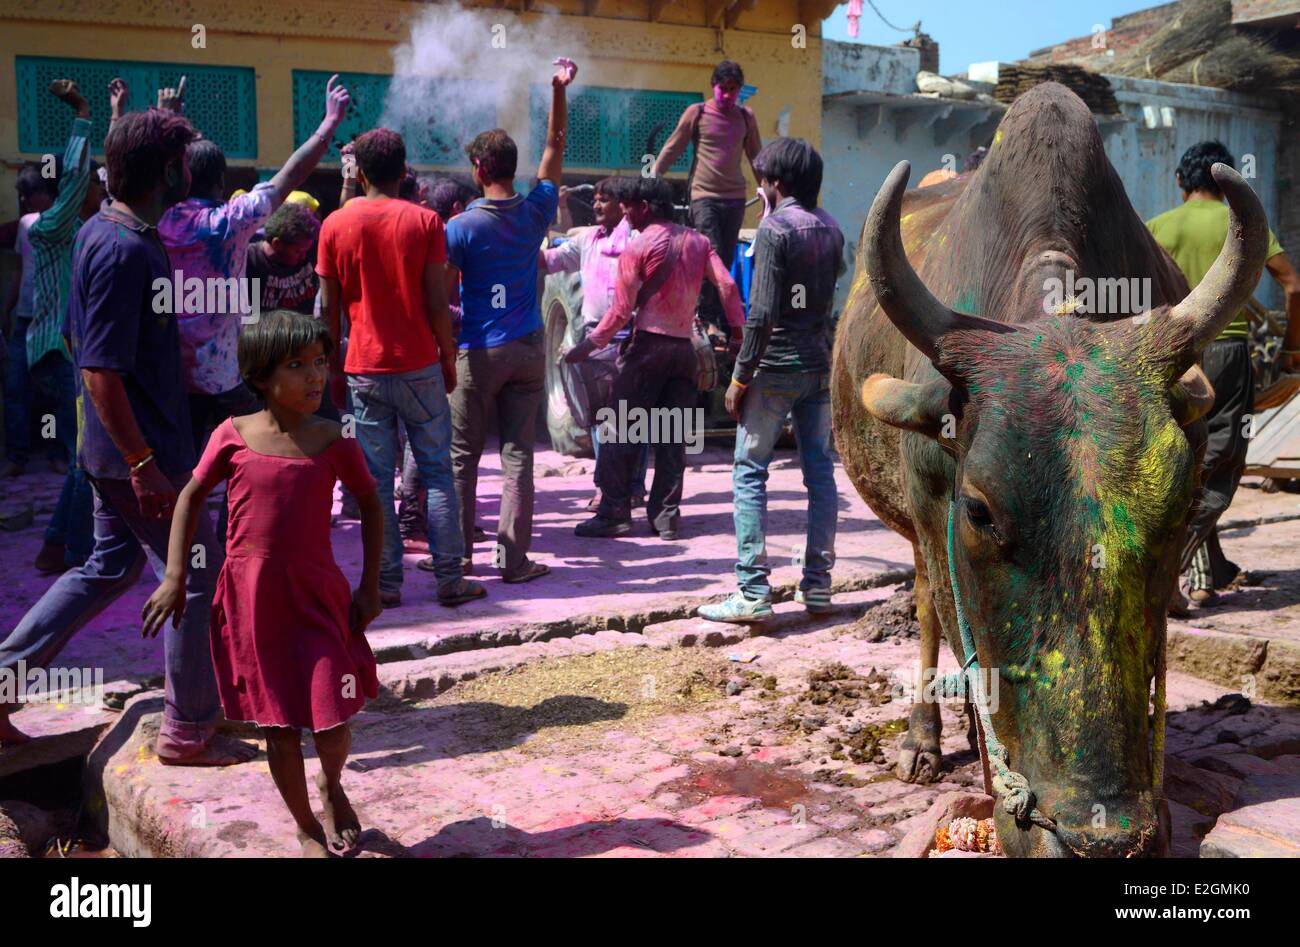 India Uttar Pradesh State Barsana people throw coloured powder in streets for celebrating love between Krishna and Radha during Holi festival celebrations Stock Photo